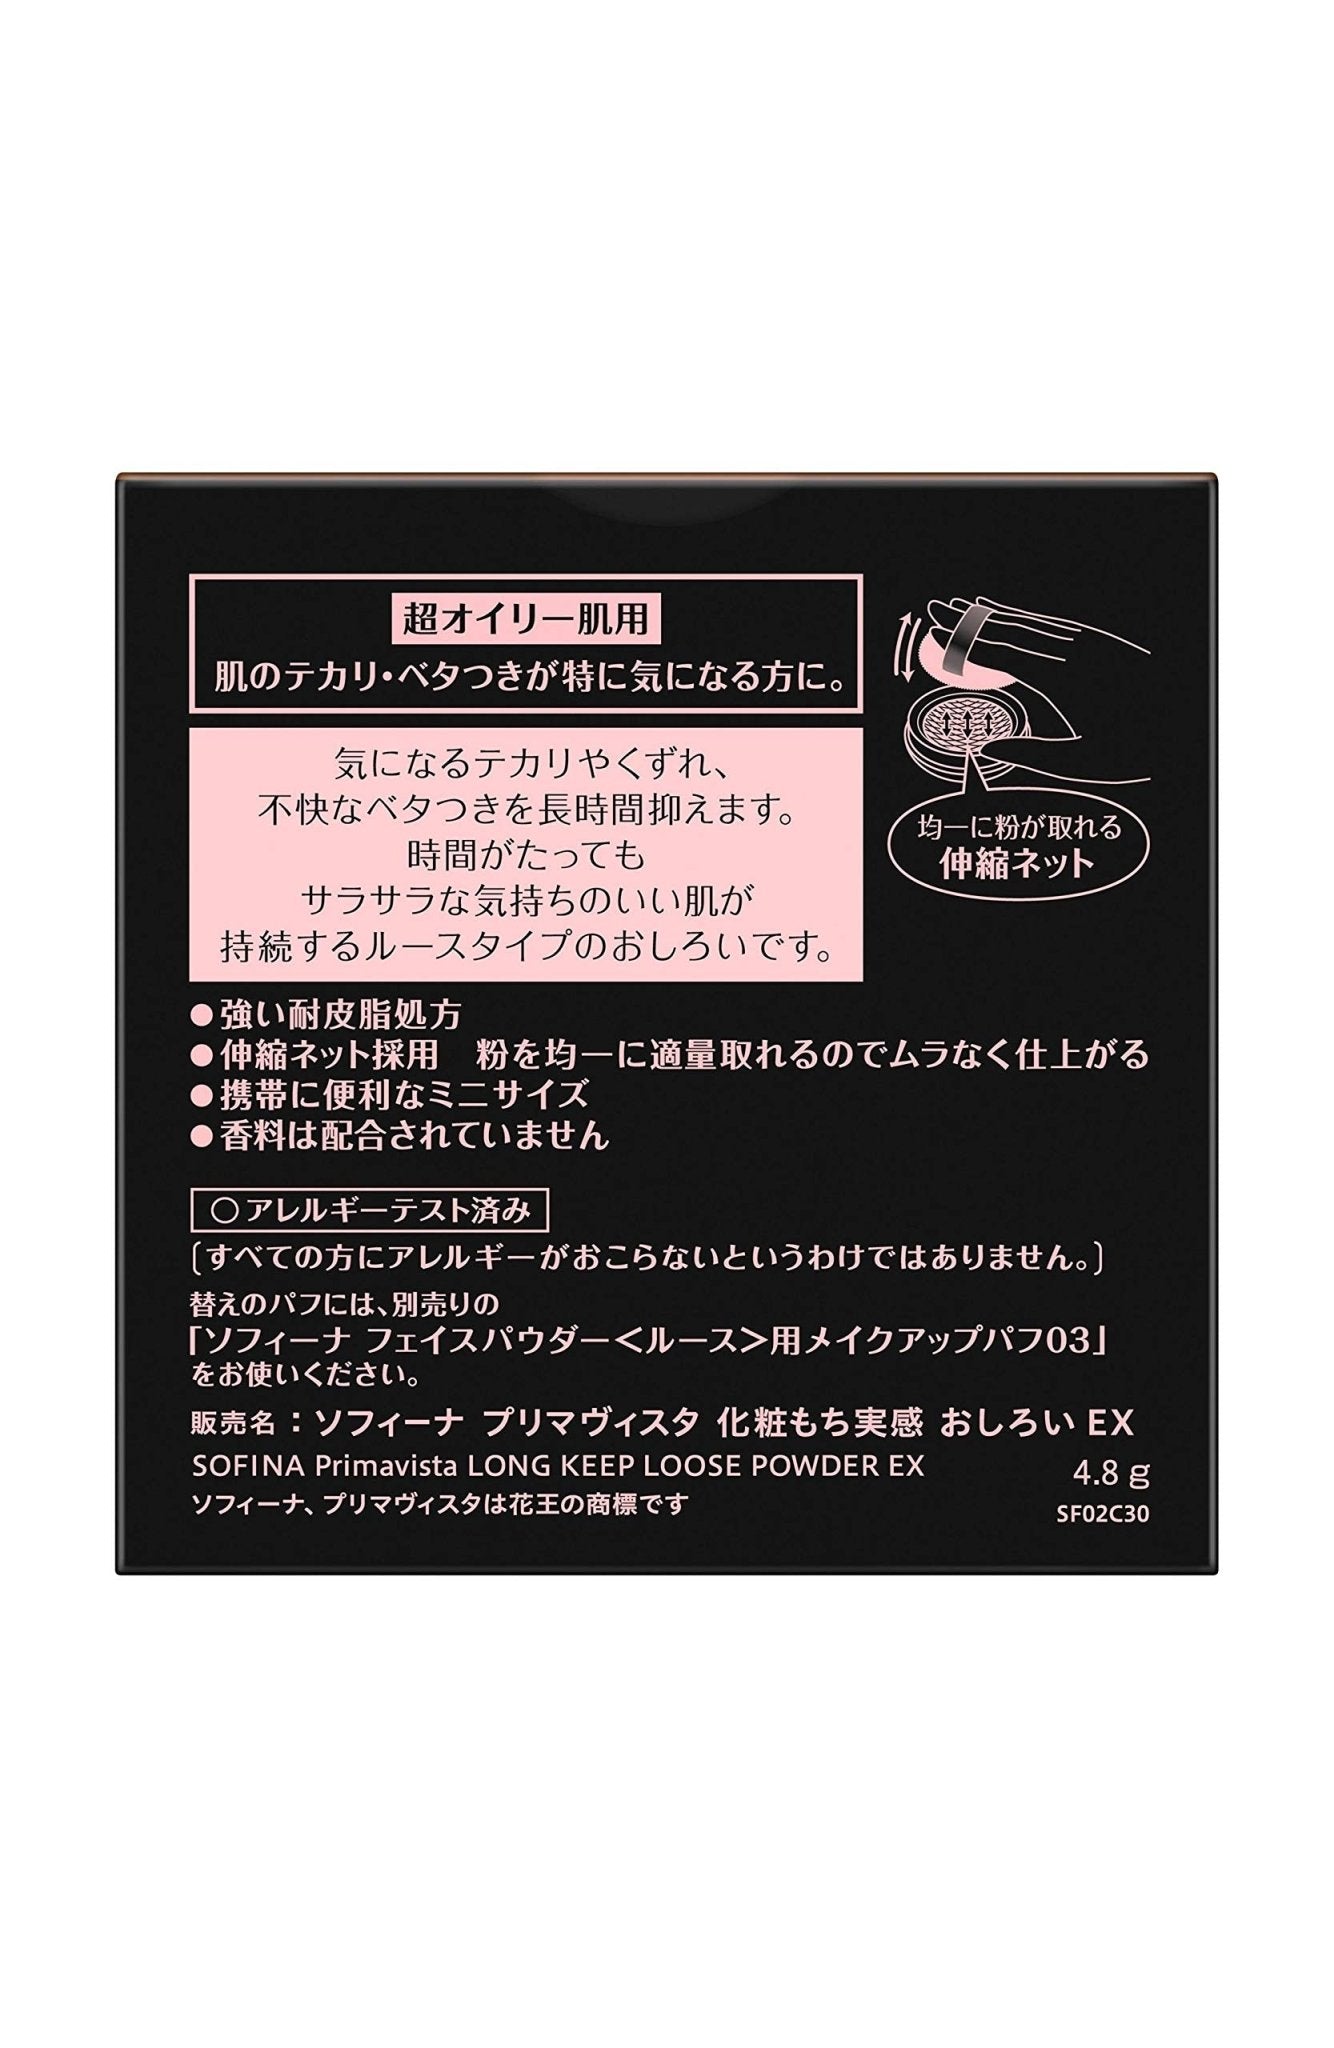 Belulu Ultrasonic Facial Moisture Gel B2 Bottle 50g - Japanese Moisture Gel - YOYO JAPAN